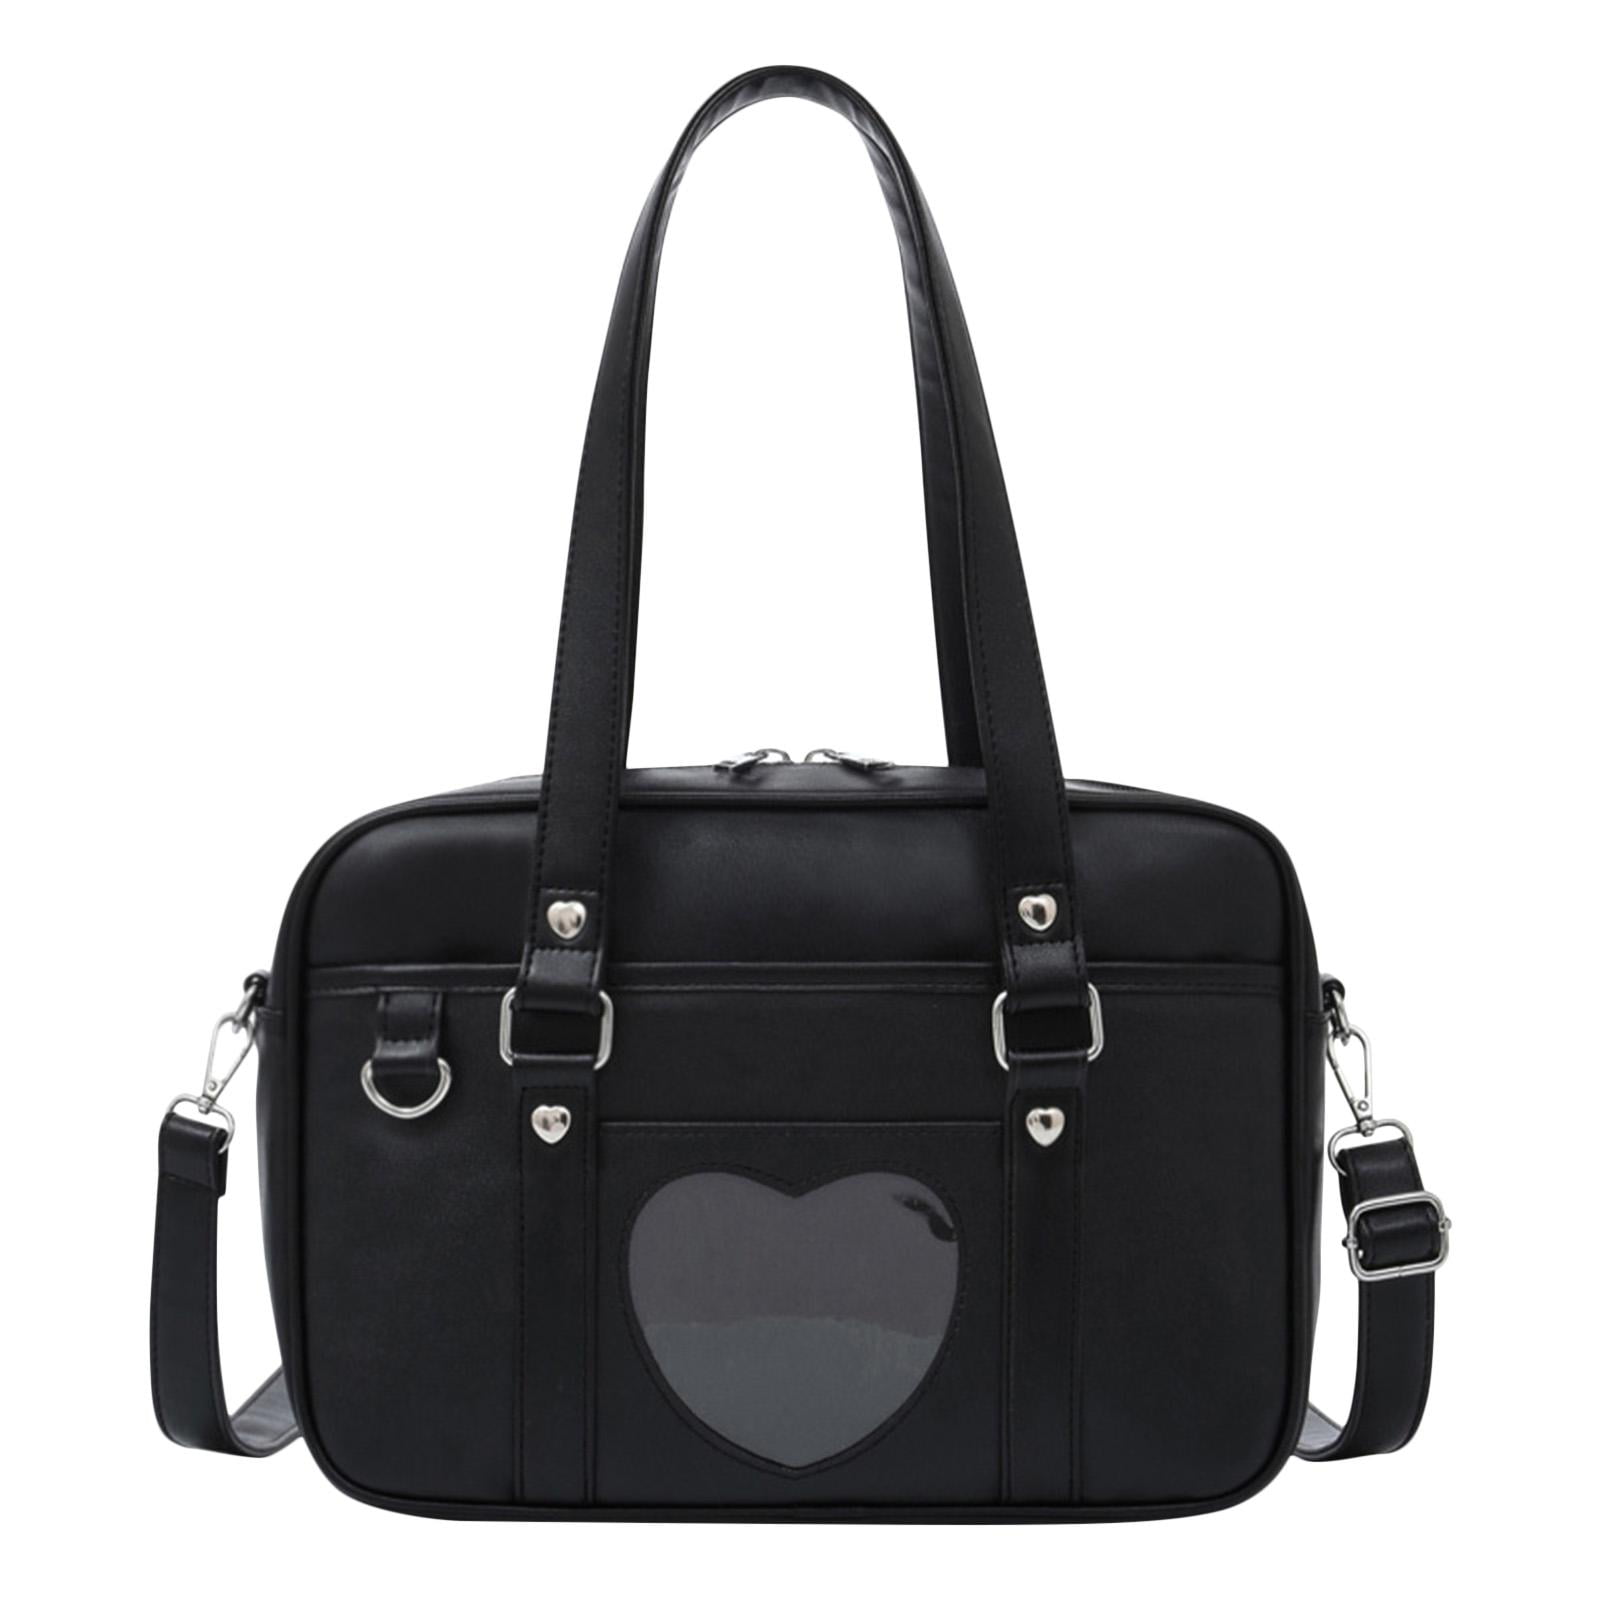 Japanese School Bag Women Handbag Heart Shape School Handbags Cosplay Anime  Tote Bag